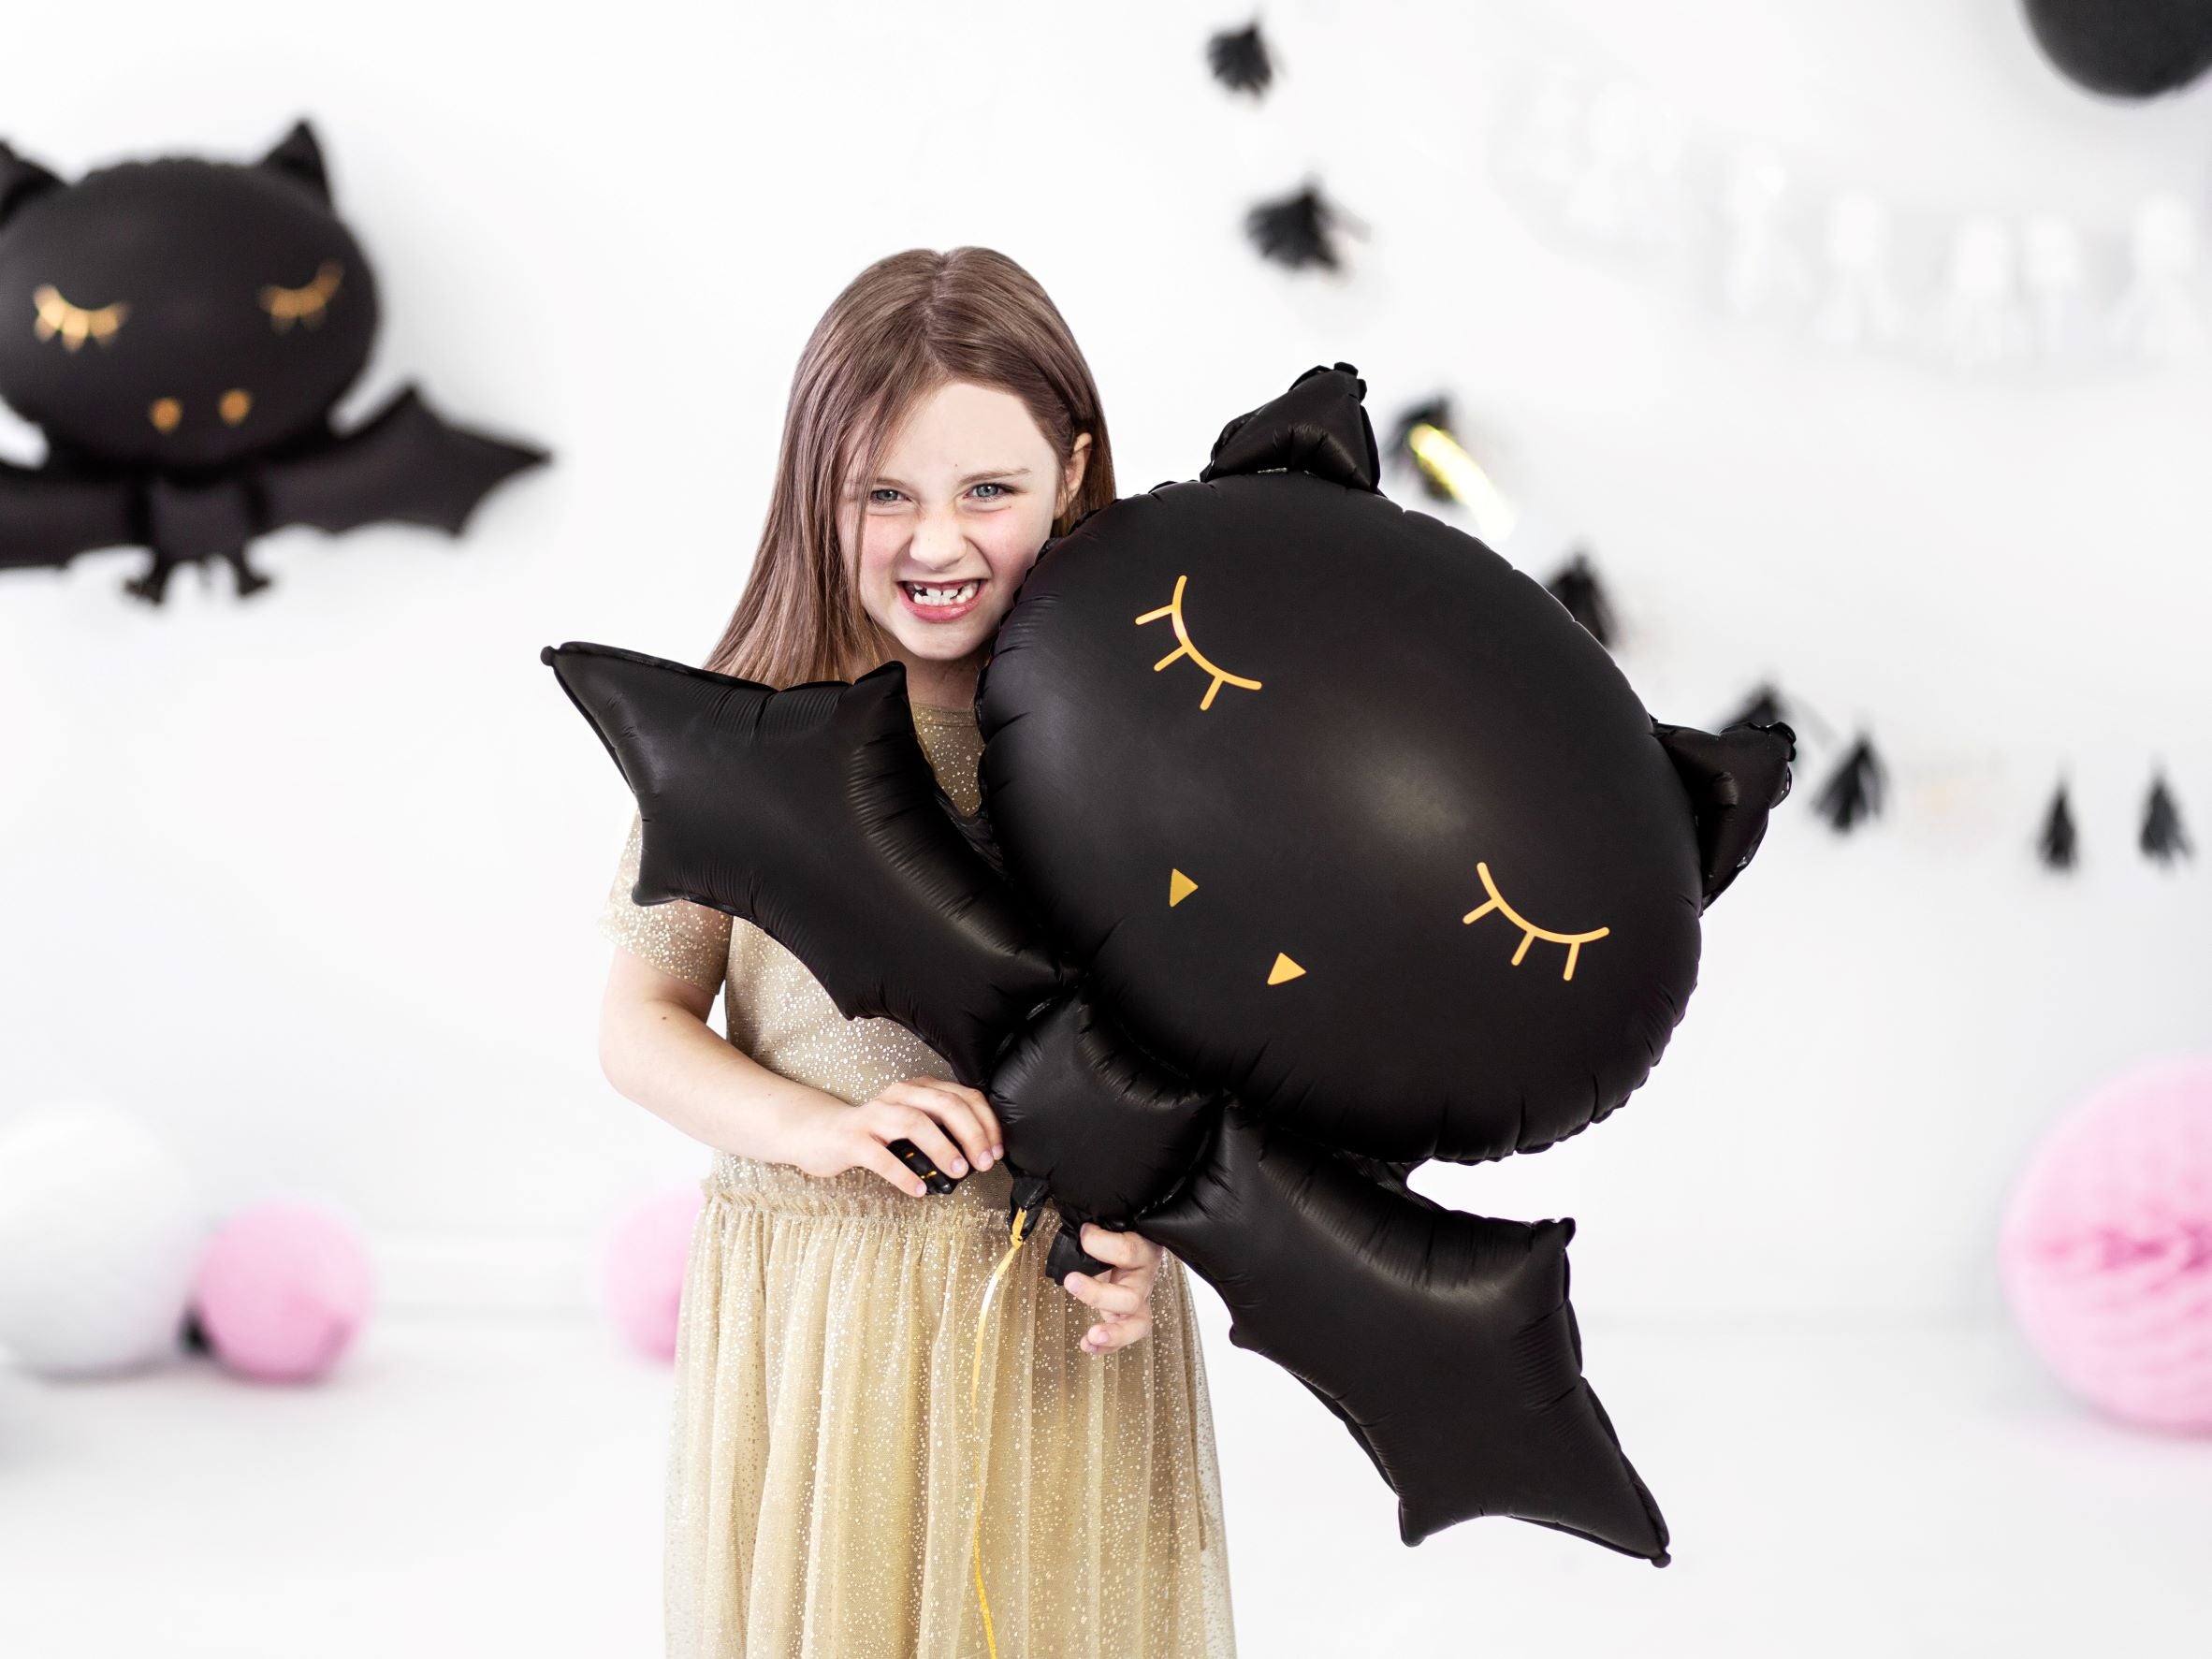 Giant Bat Foil Balloon for Halloween